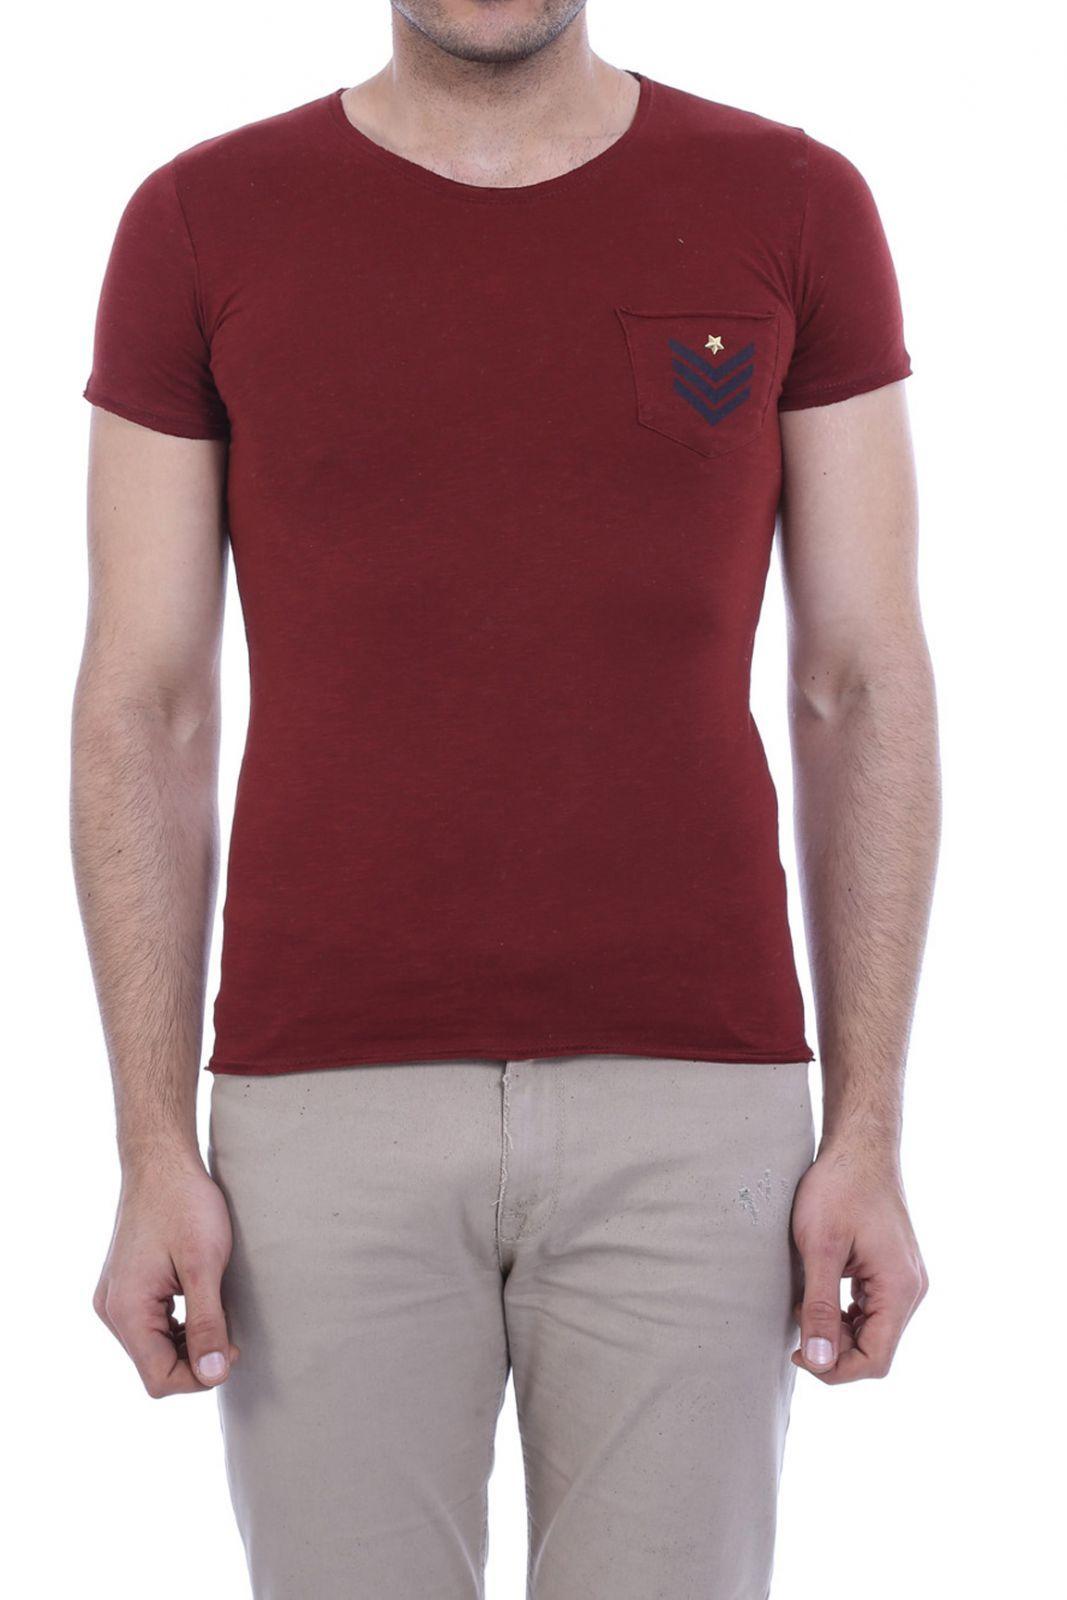 Burgundy Circle Logo - Burgundy Circle Neck Men T-shirt Pockets on Breast